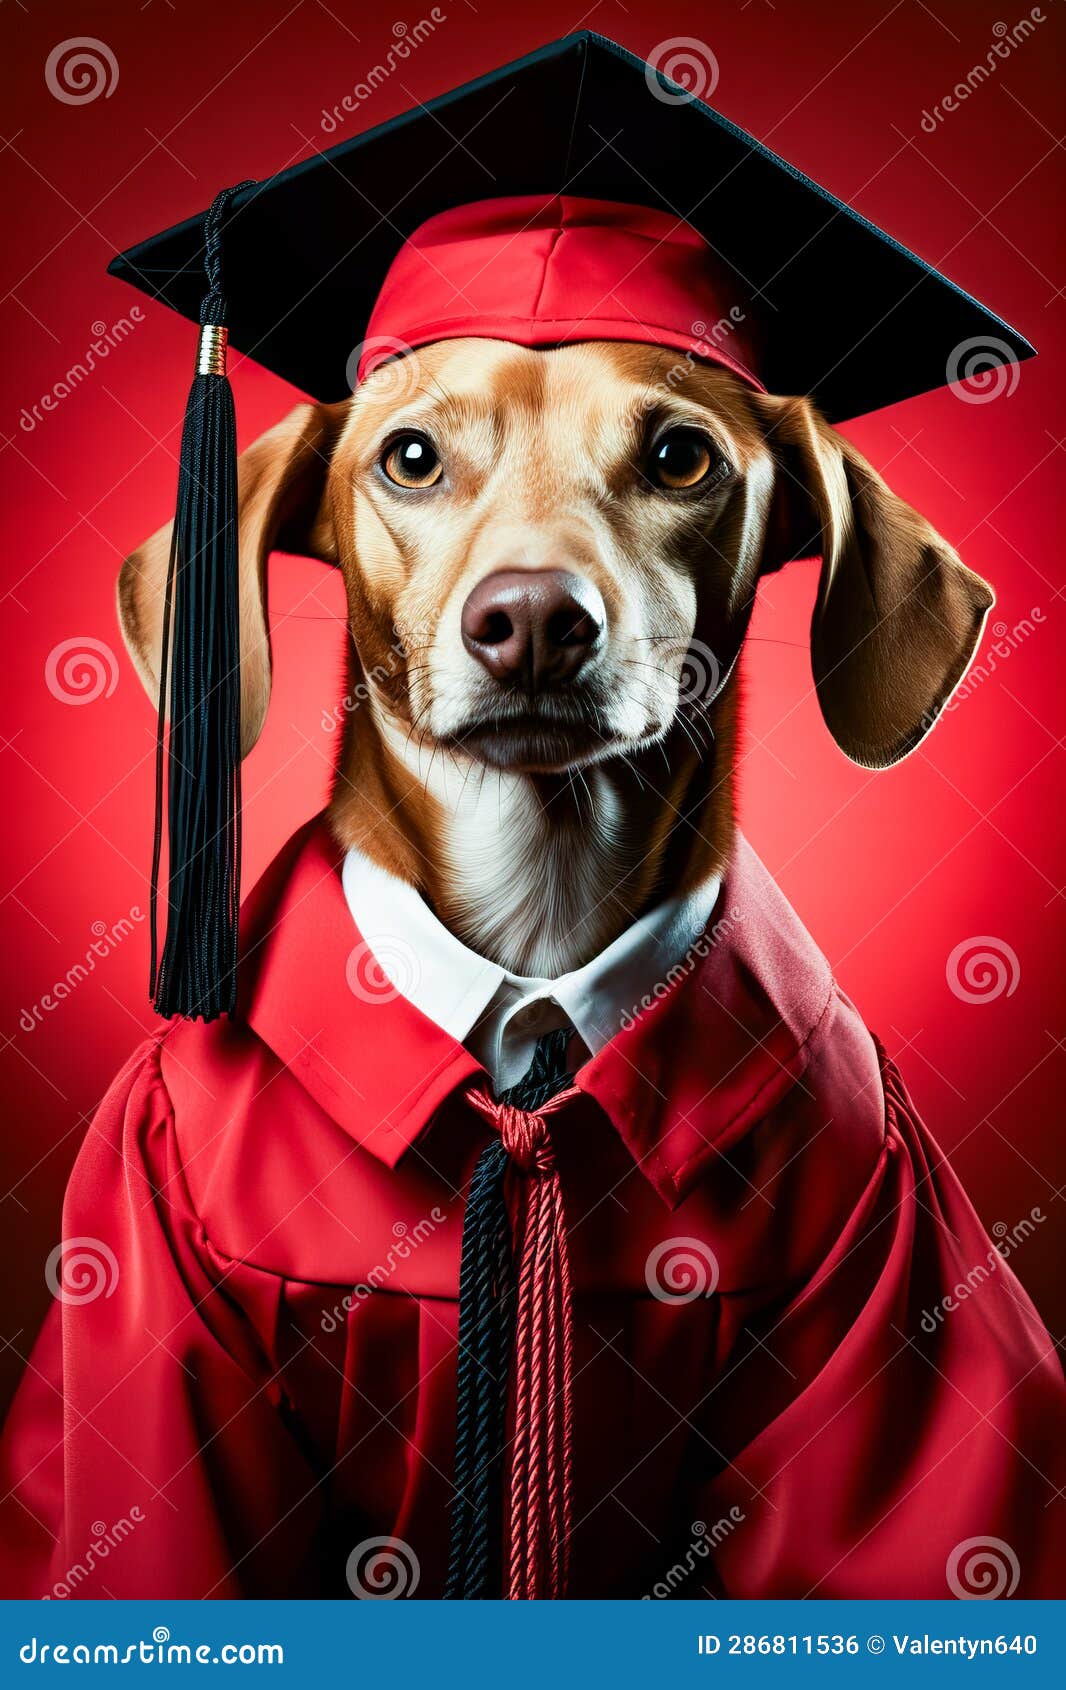 Graduation Hats Dogs | Graduation Hats Pet | Graduation Cap Dogs |  Graduation Cats Hat - Dog Caps - Aliexpress